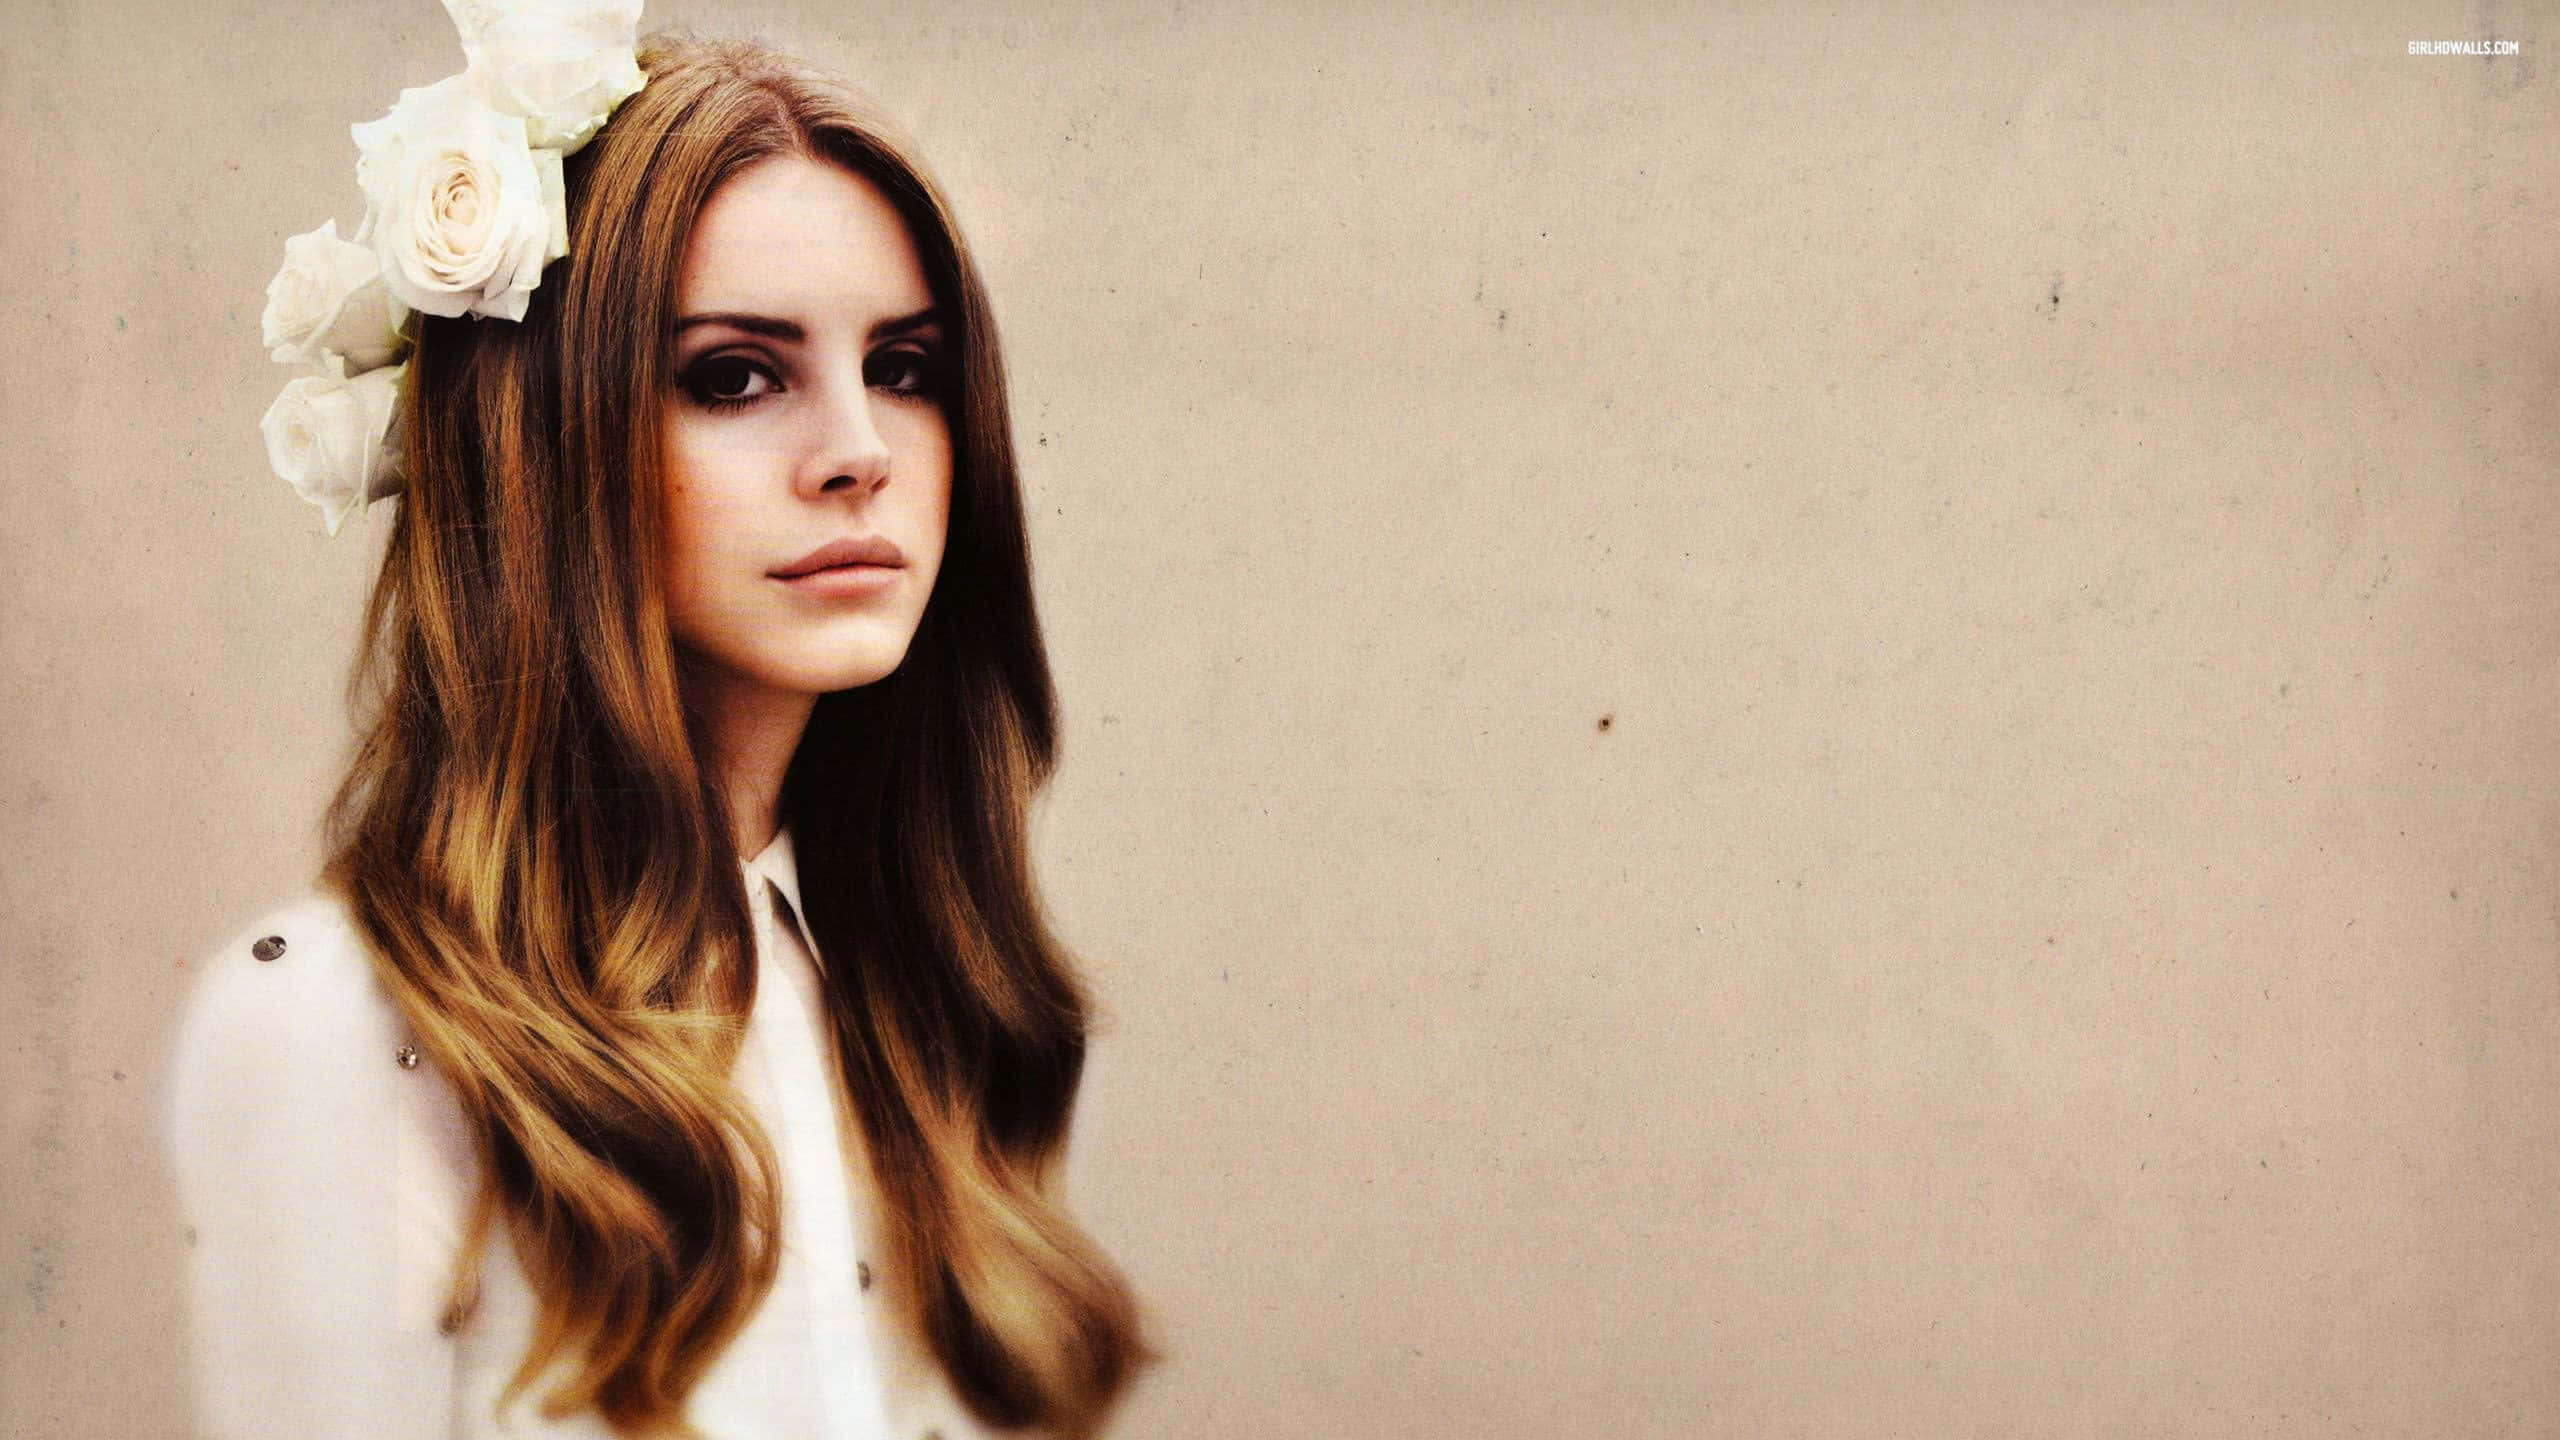 Singer-songwriter Lana Del Rey In Her Signature Retro-inspired Look Wallpaper